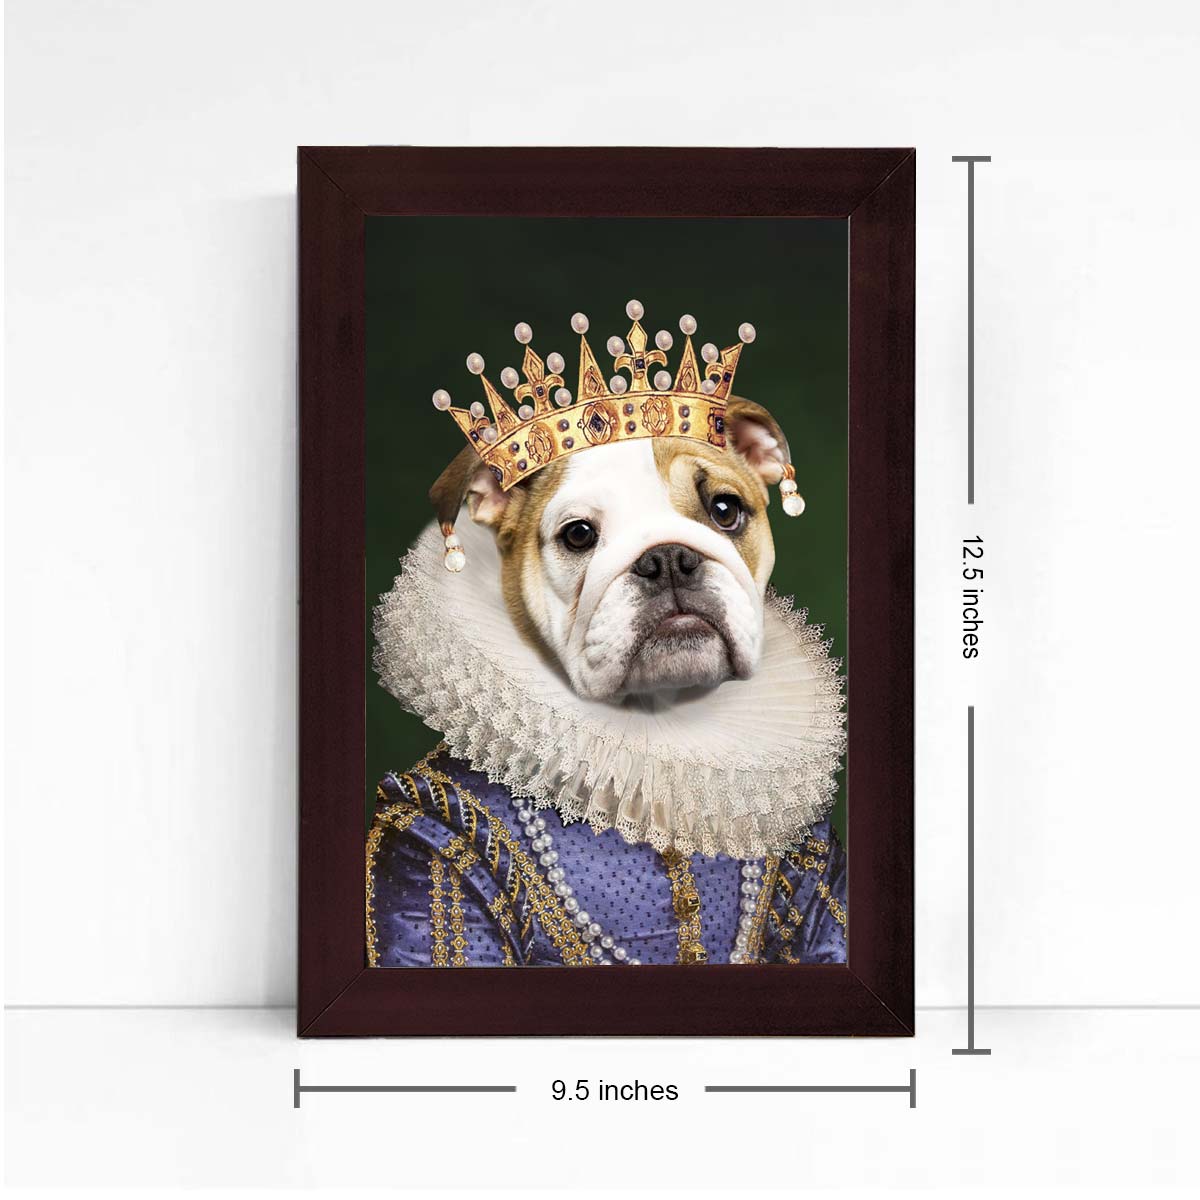 The Royal King Pet Digital Portrait Photo Frame